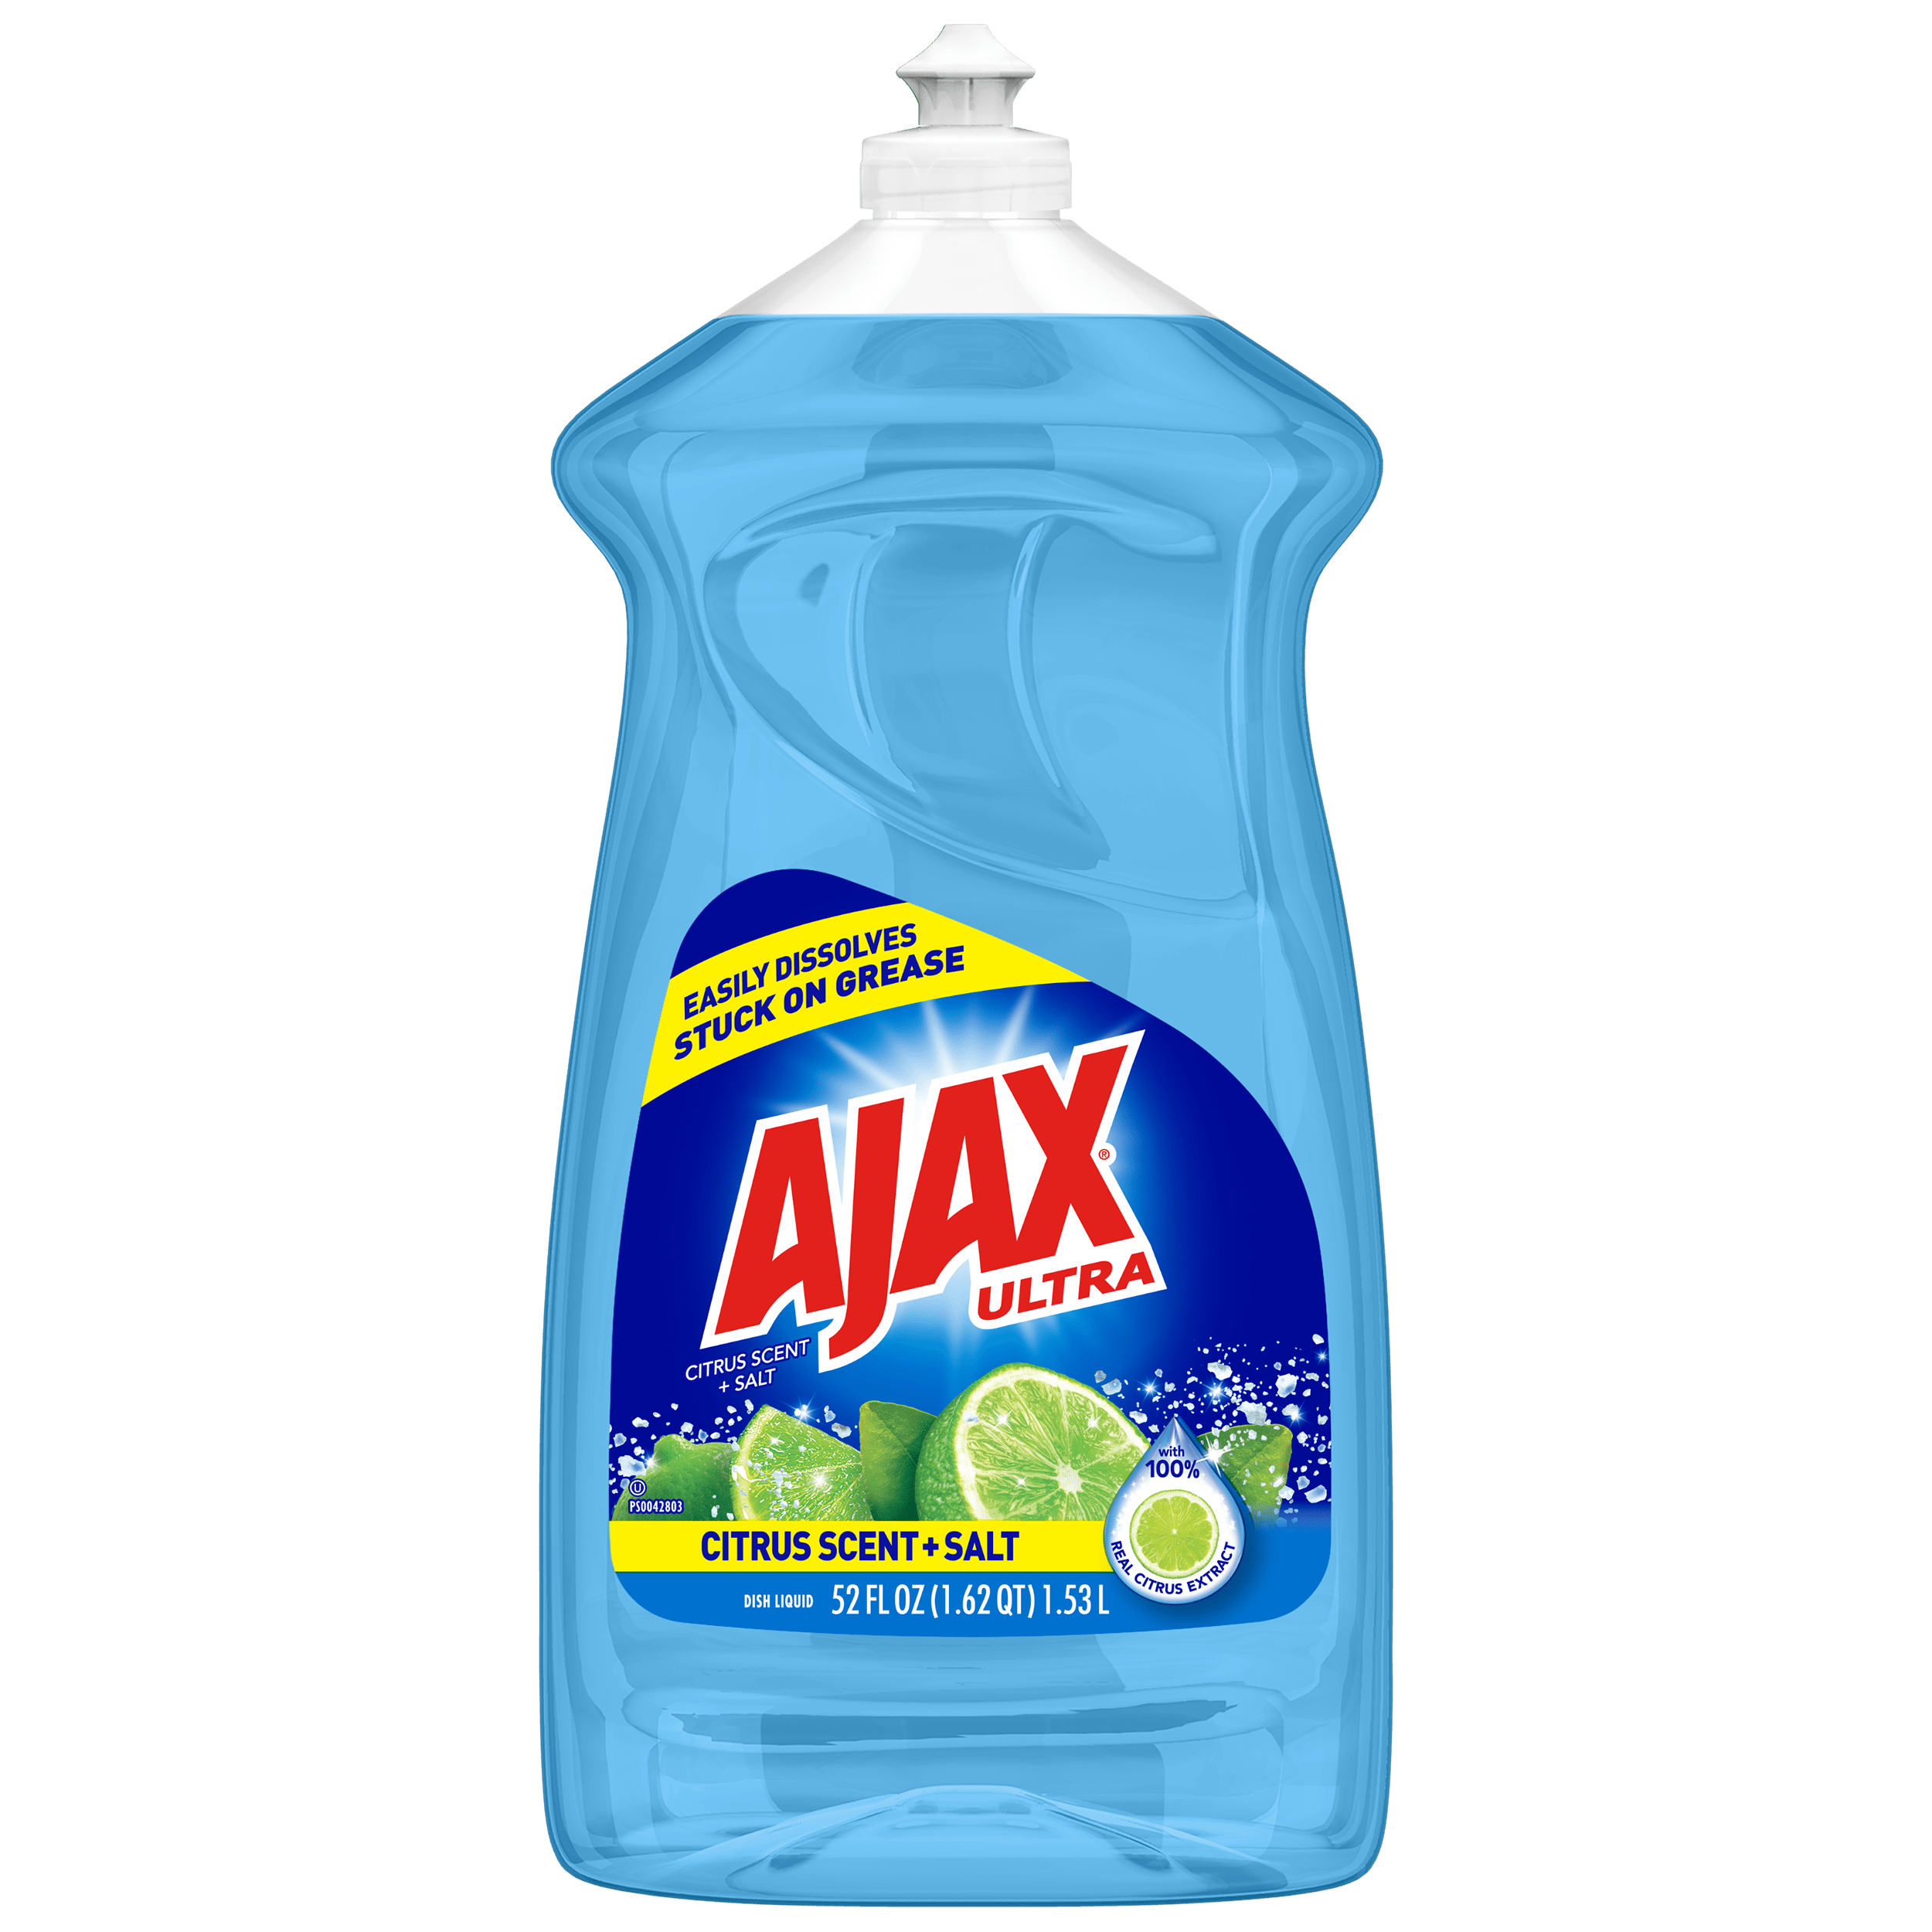 Ajax Ultra Citrus Scent + Salt